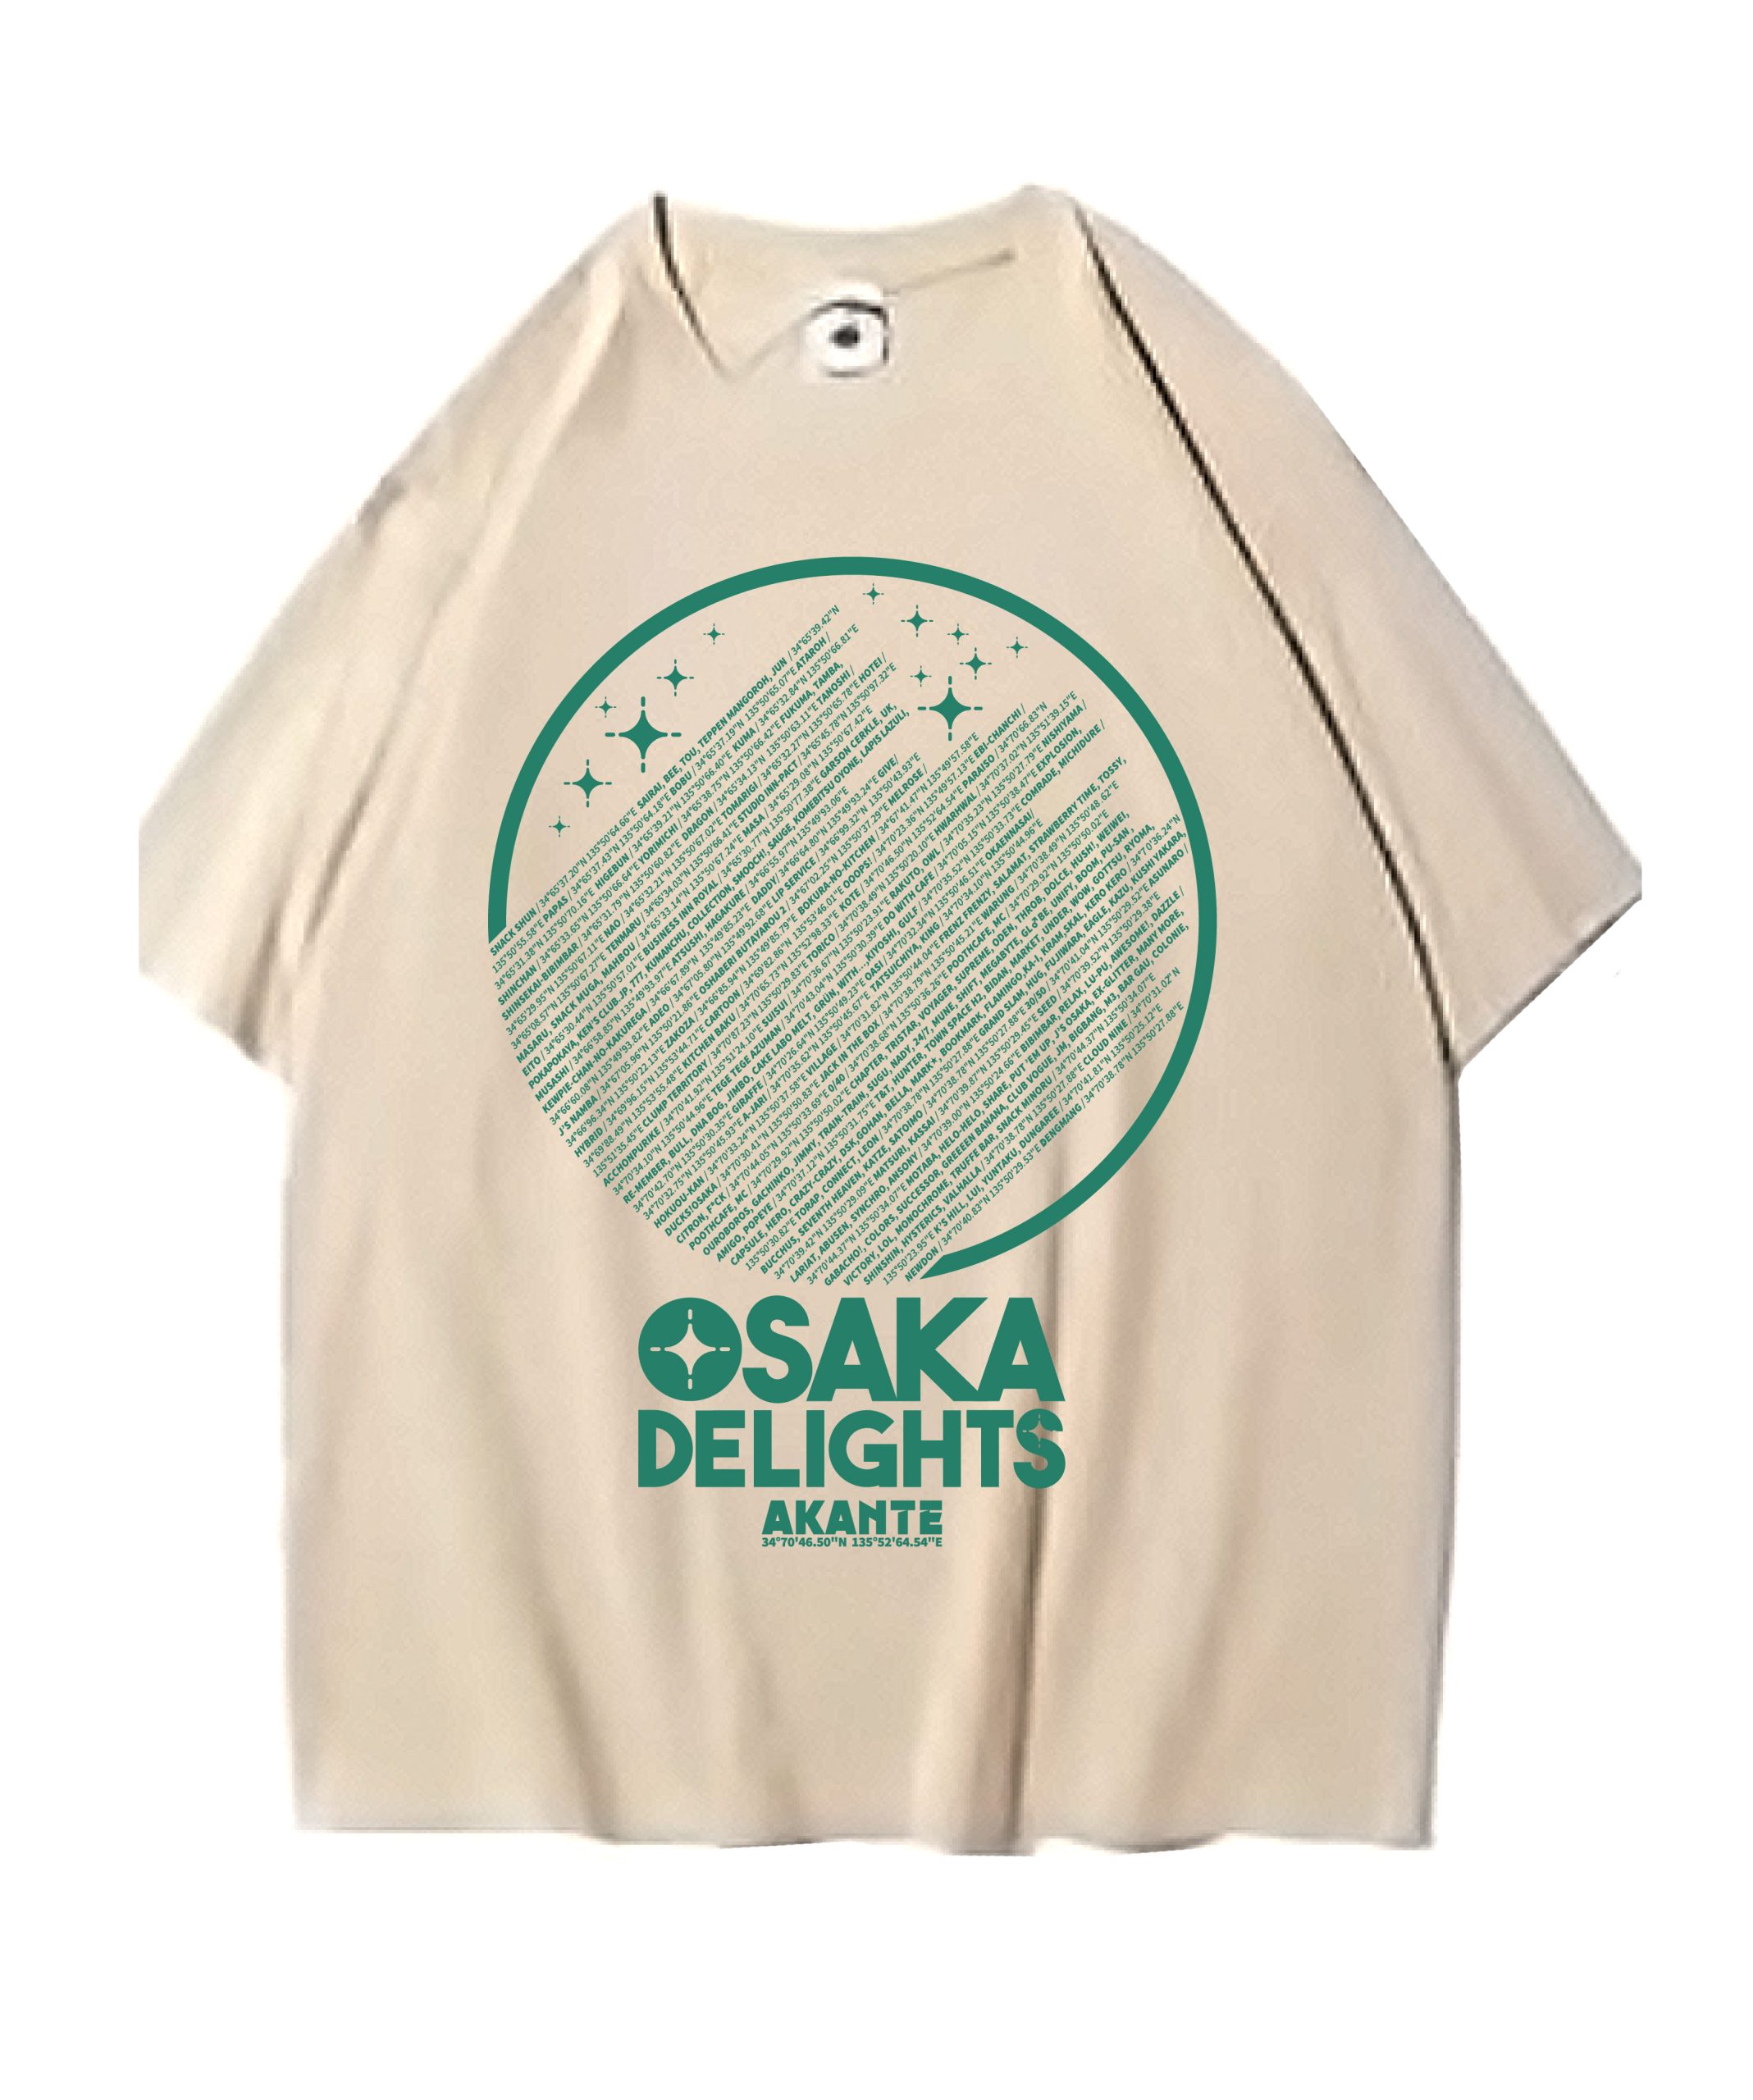 OSAKA DELIGHTS Tシャツ カーキxダスティー grain